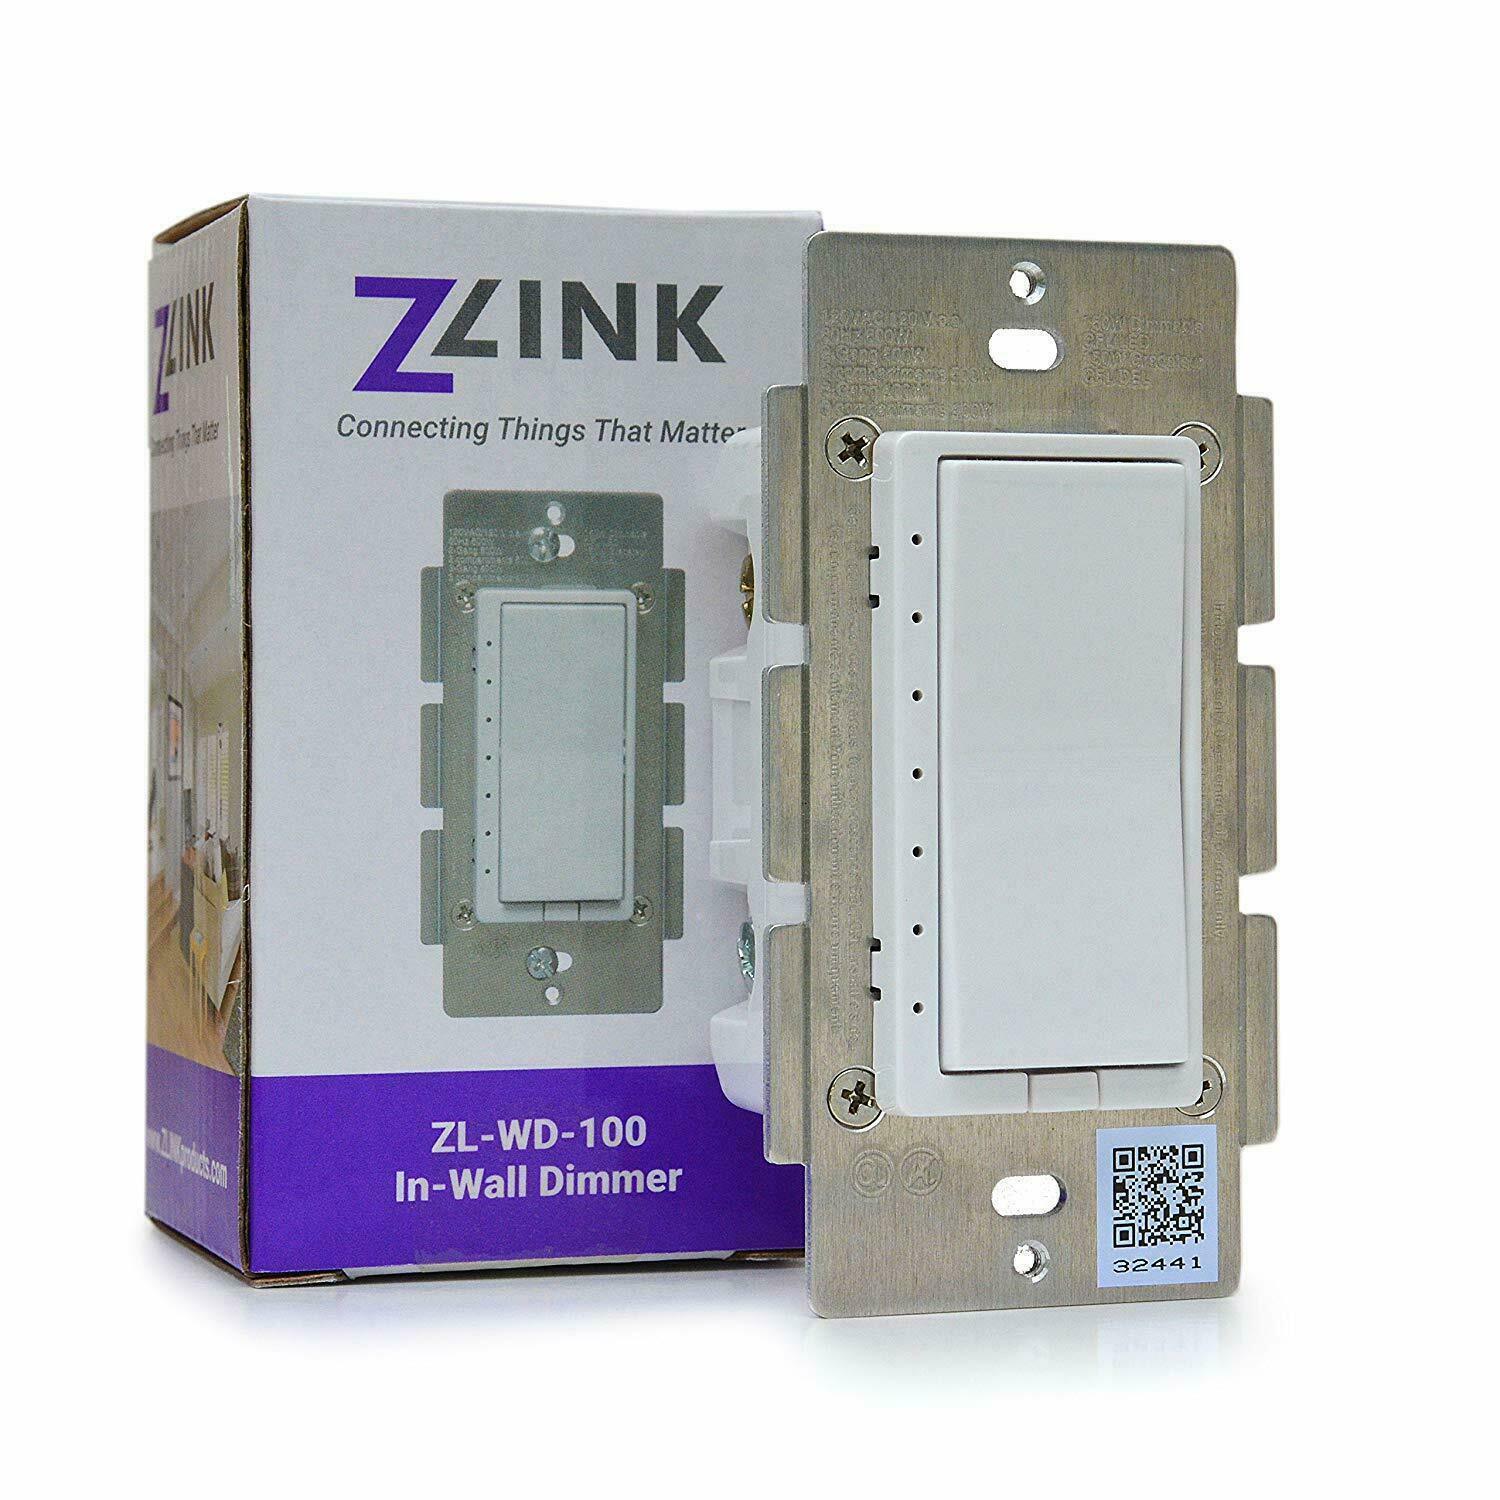 ZLINK Z-Wave Plus Smart Light Dimmer with S2 and SmartStart, Amazon Alexa Ready - ZL-WD-100